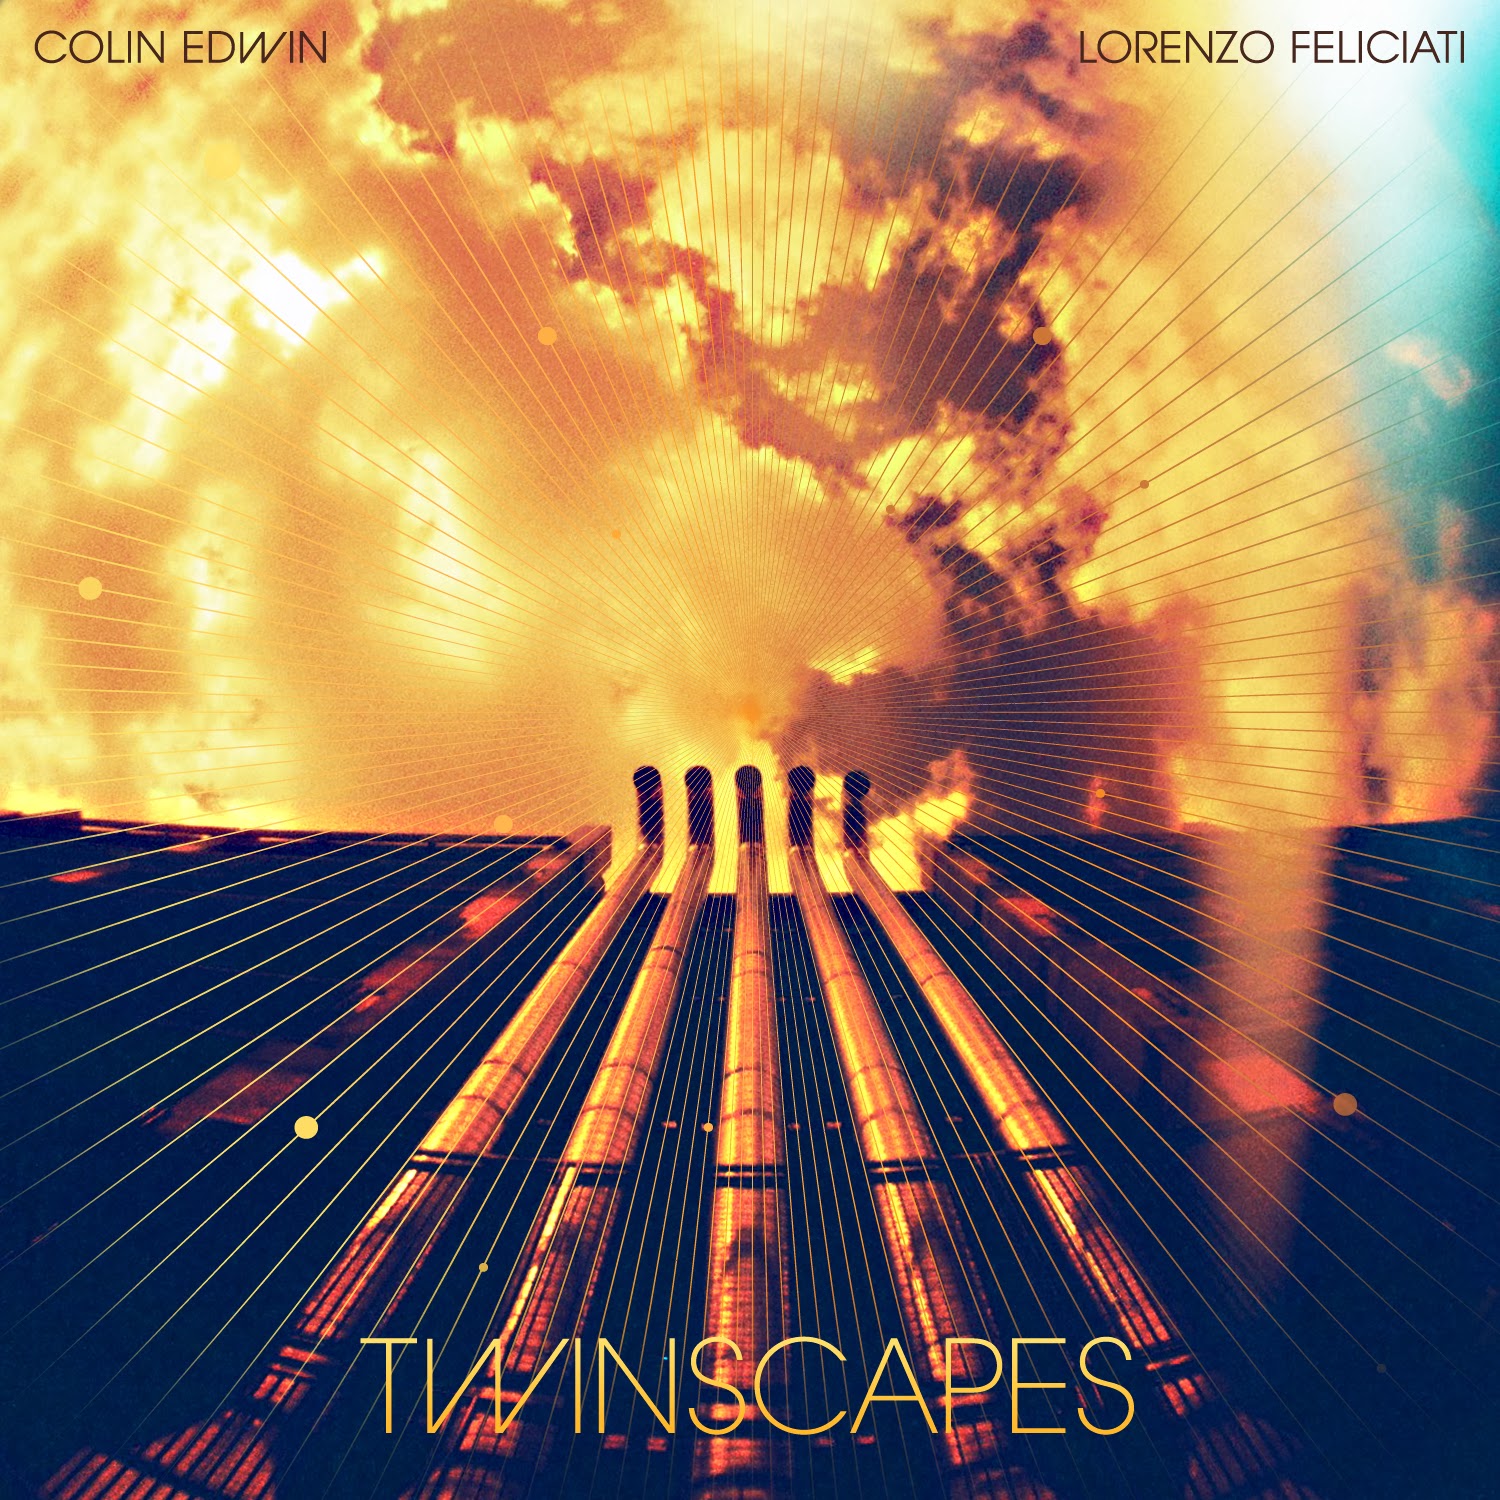 Radiobalisage > LORENZO FELICIATI / COLIN EDWIN "Twinscapes" (Rare Noise Records)